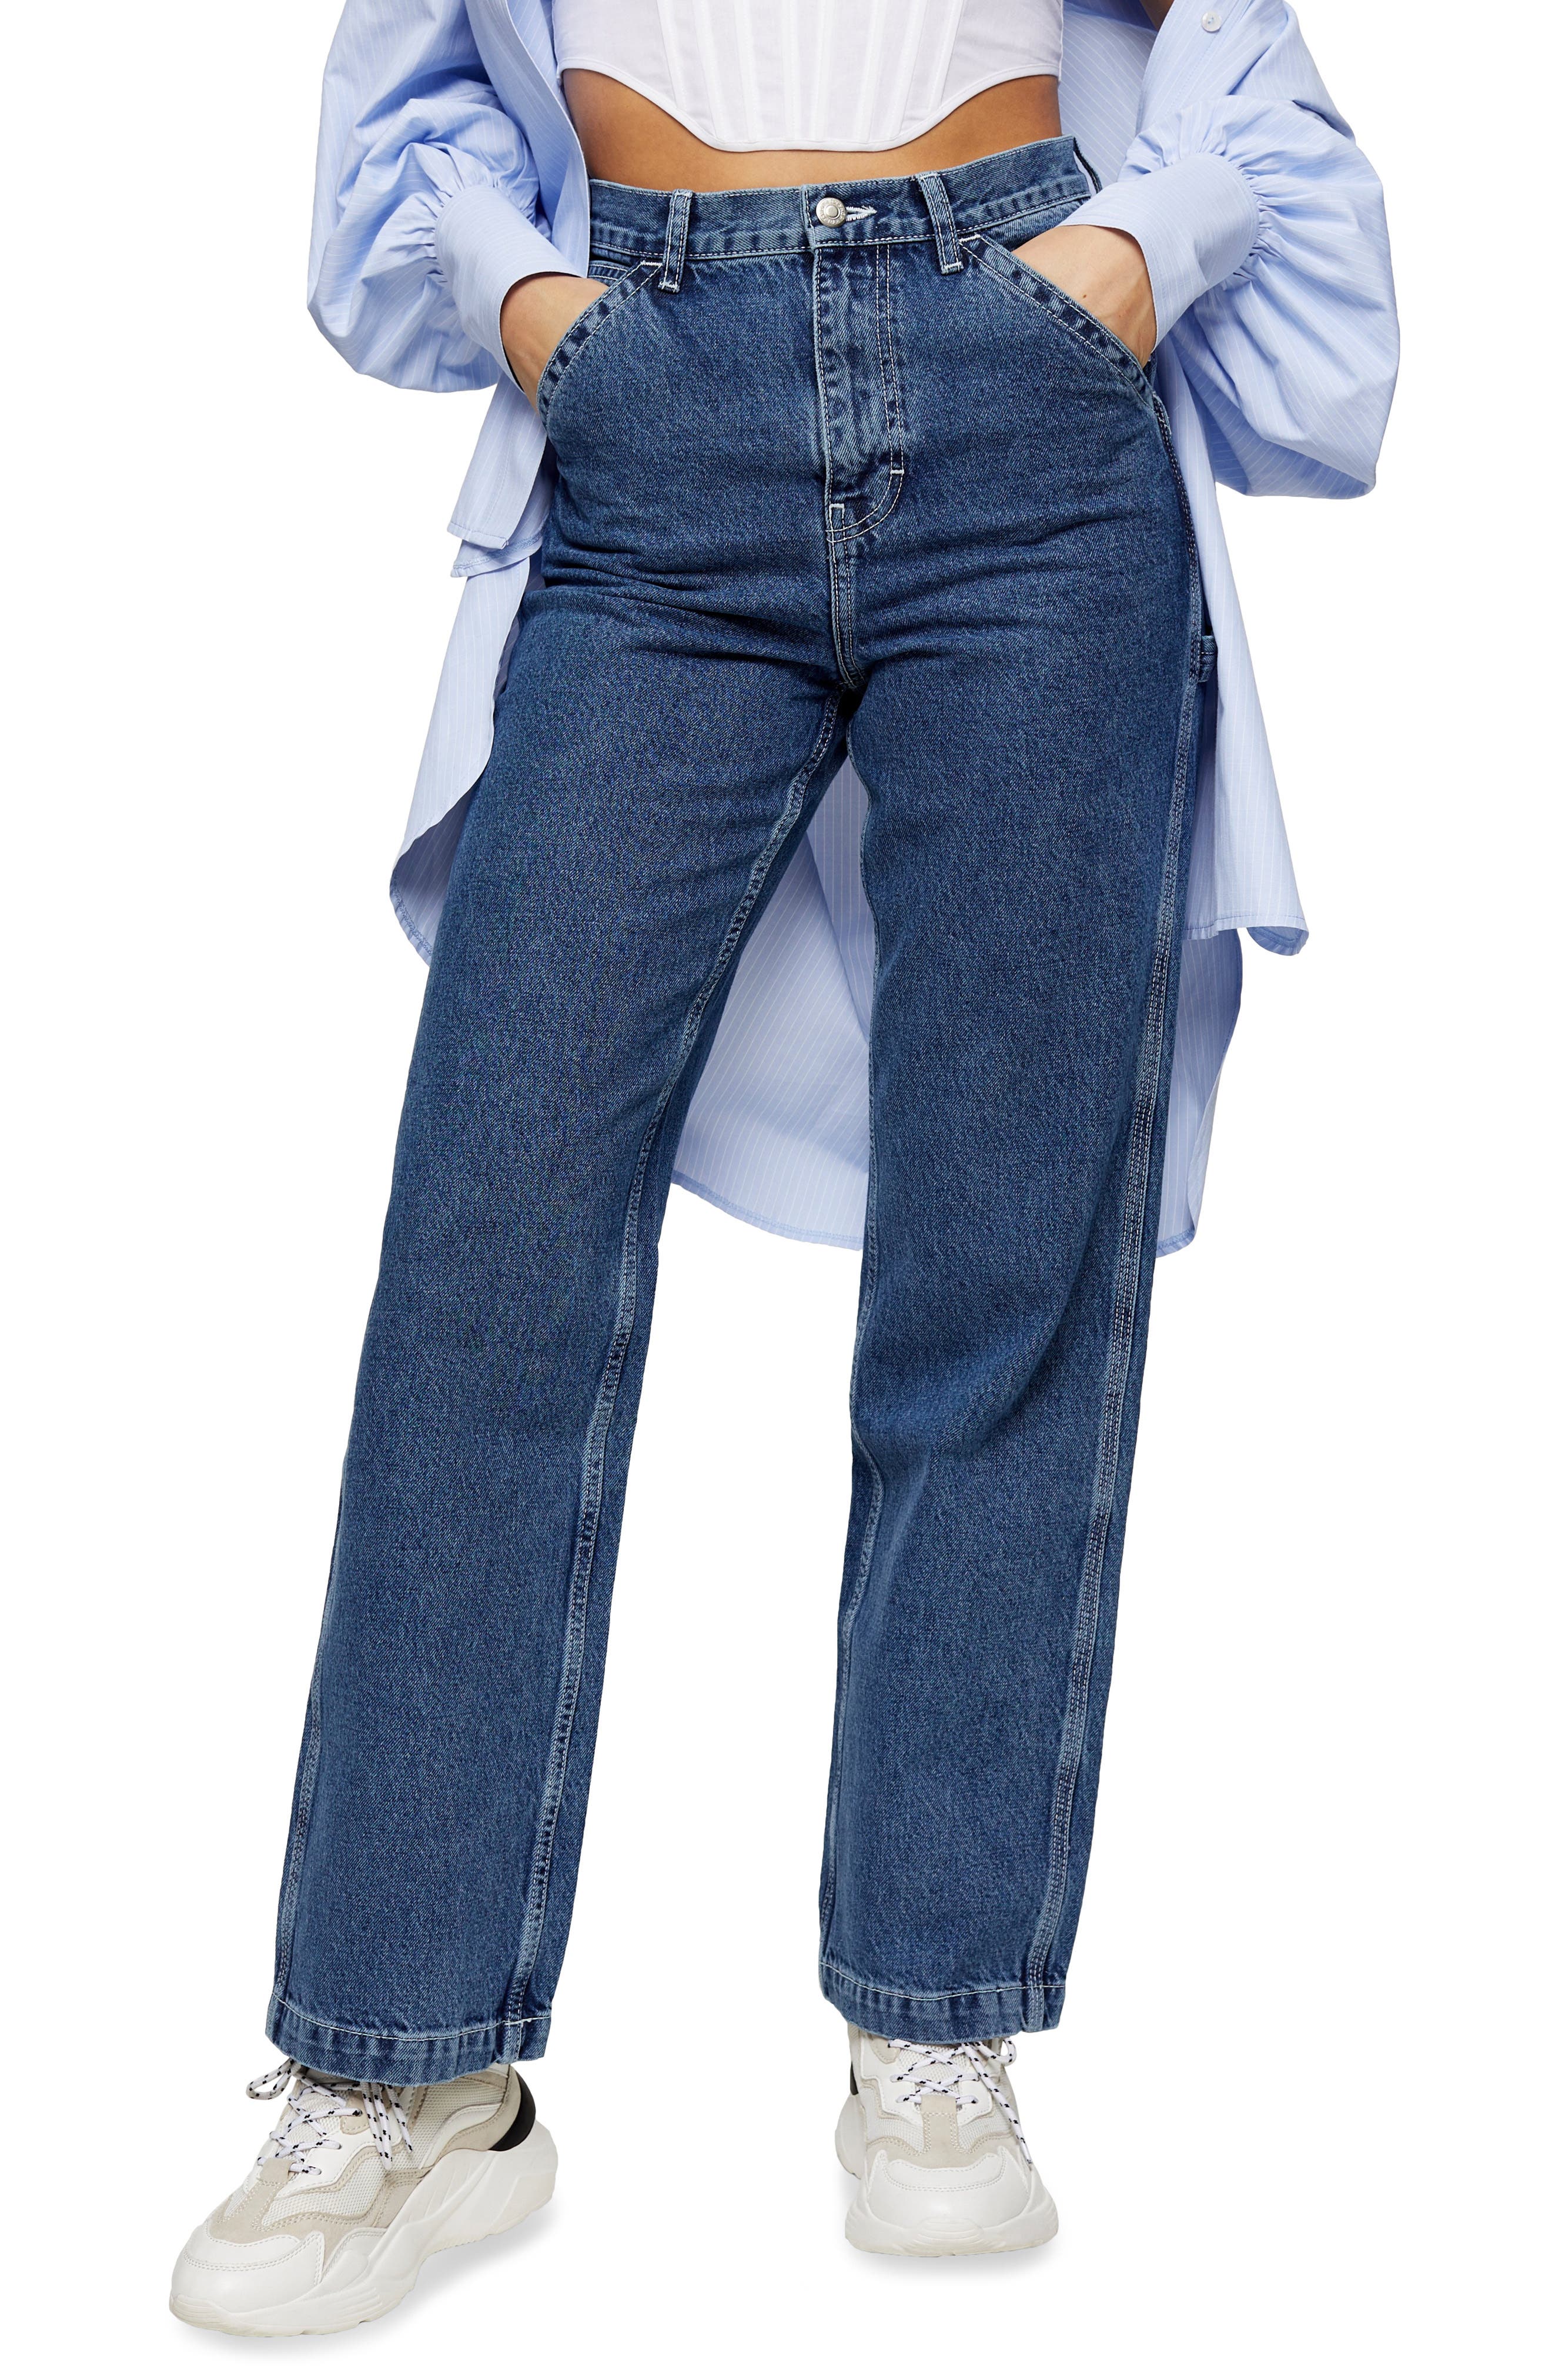 plaid skinny jeans mens